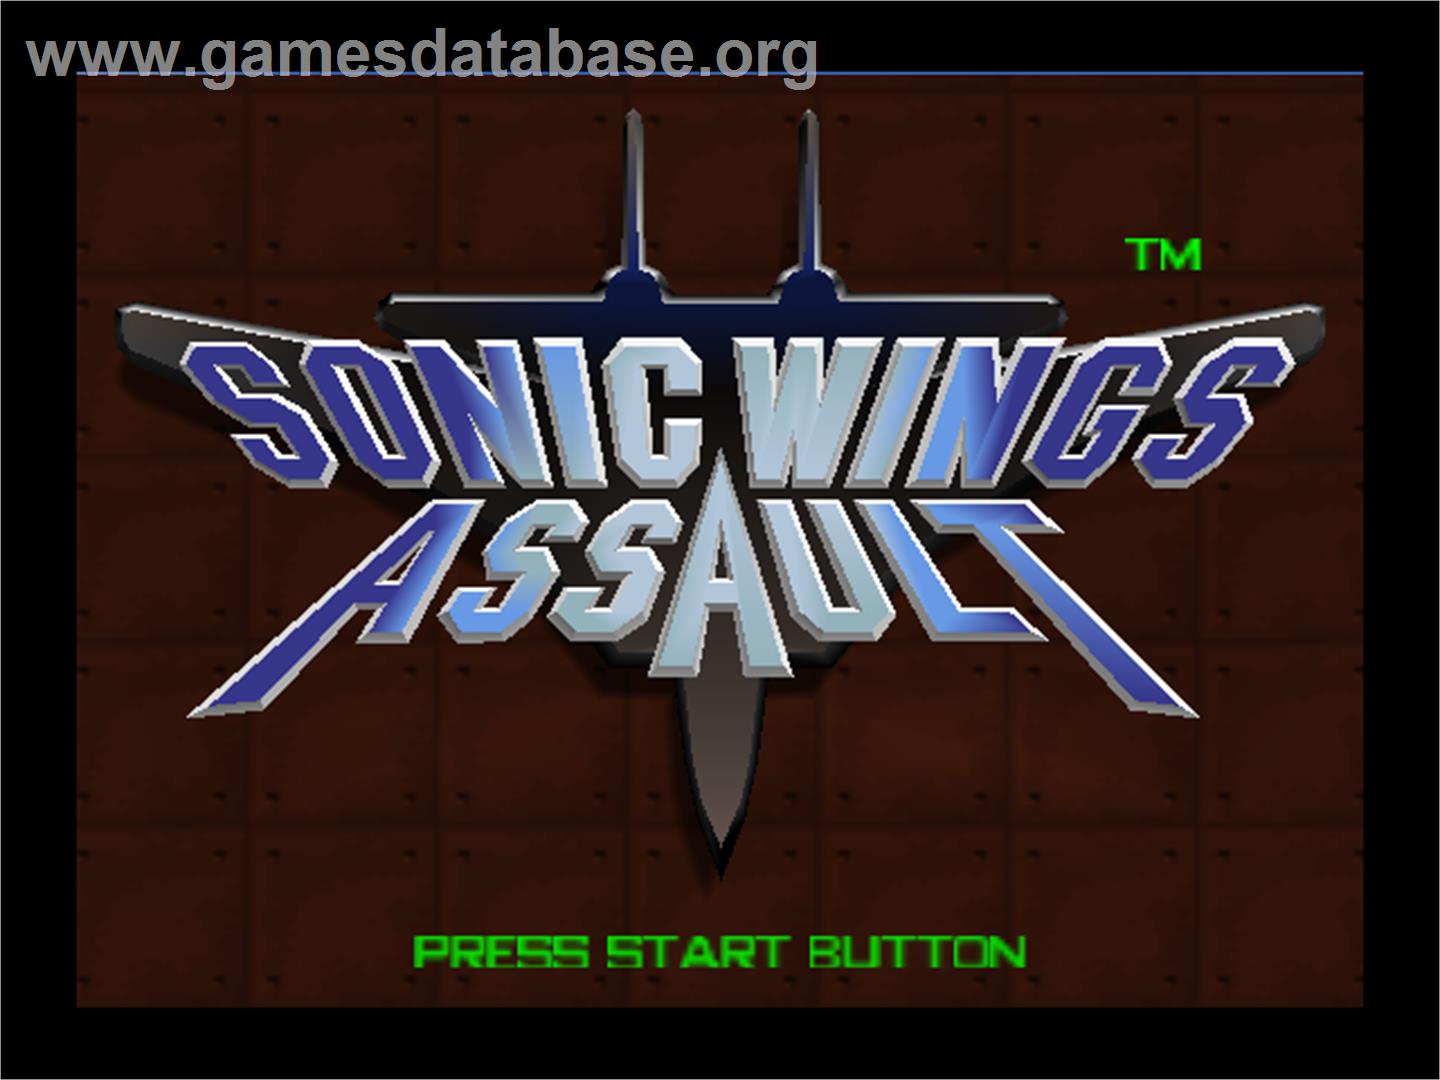 Sonic Wings Assault - Nintendo N64 - Artwork - Title Screen